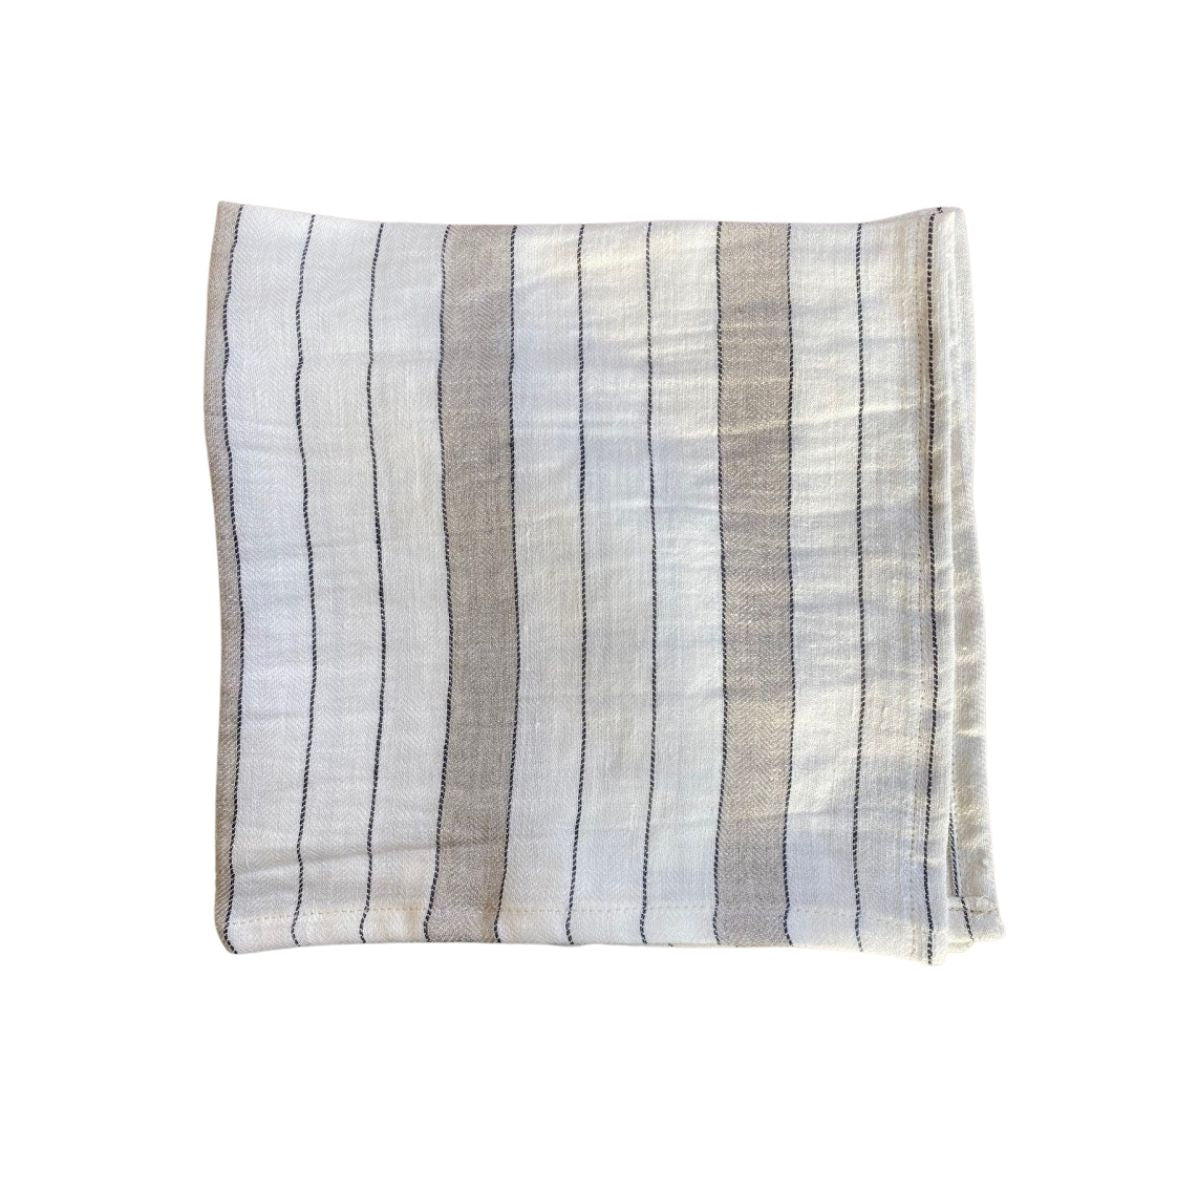 Charvet Rambouillet Stripe Linen Napkin, Sets